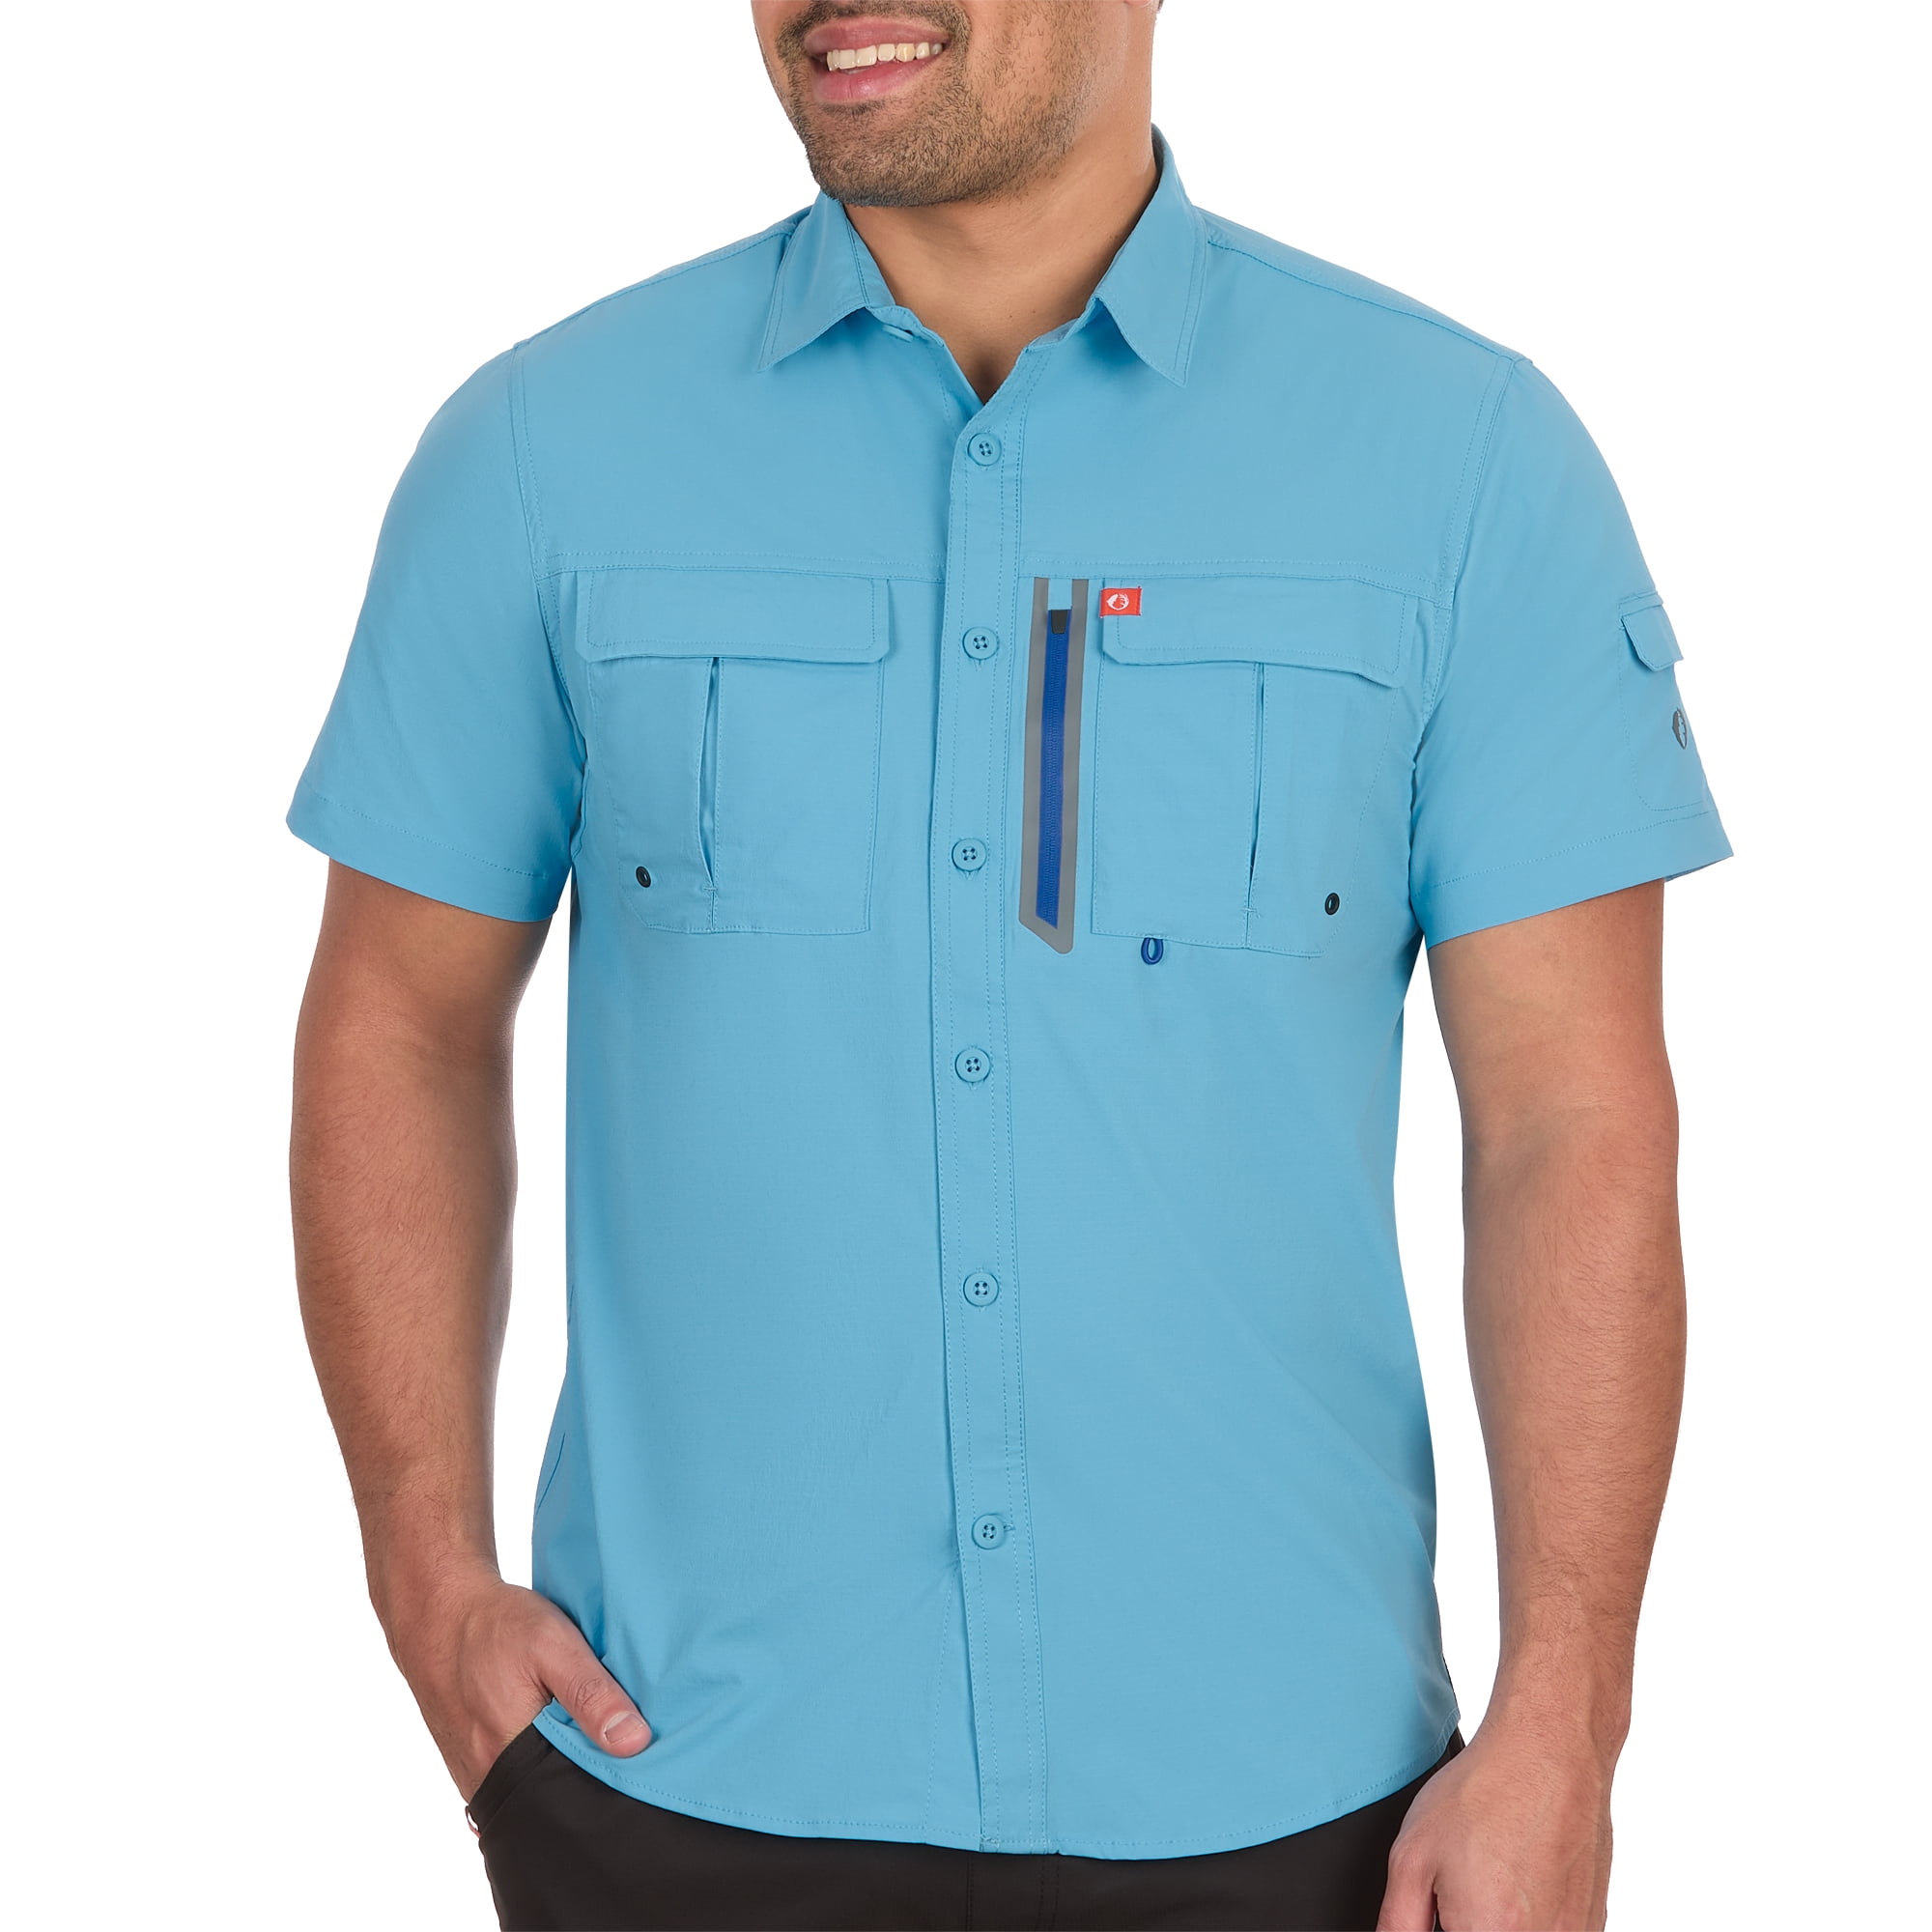 The American Outdoorsman Men's Blackfoot River Fishing Shirt, Short Sleeve  Performance Sun Protective Fisherman Shirt (Ethereal Blue, Medium) 